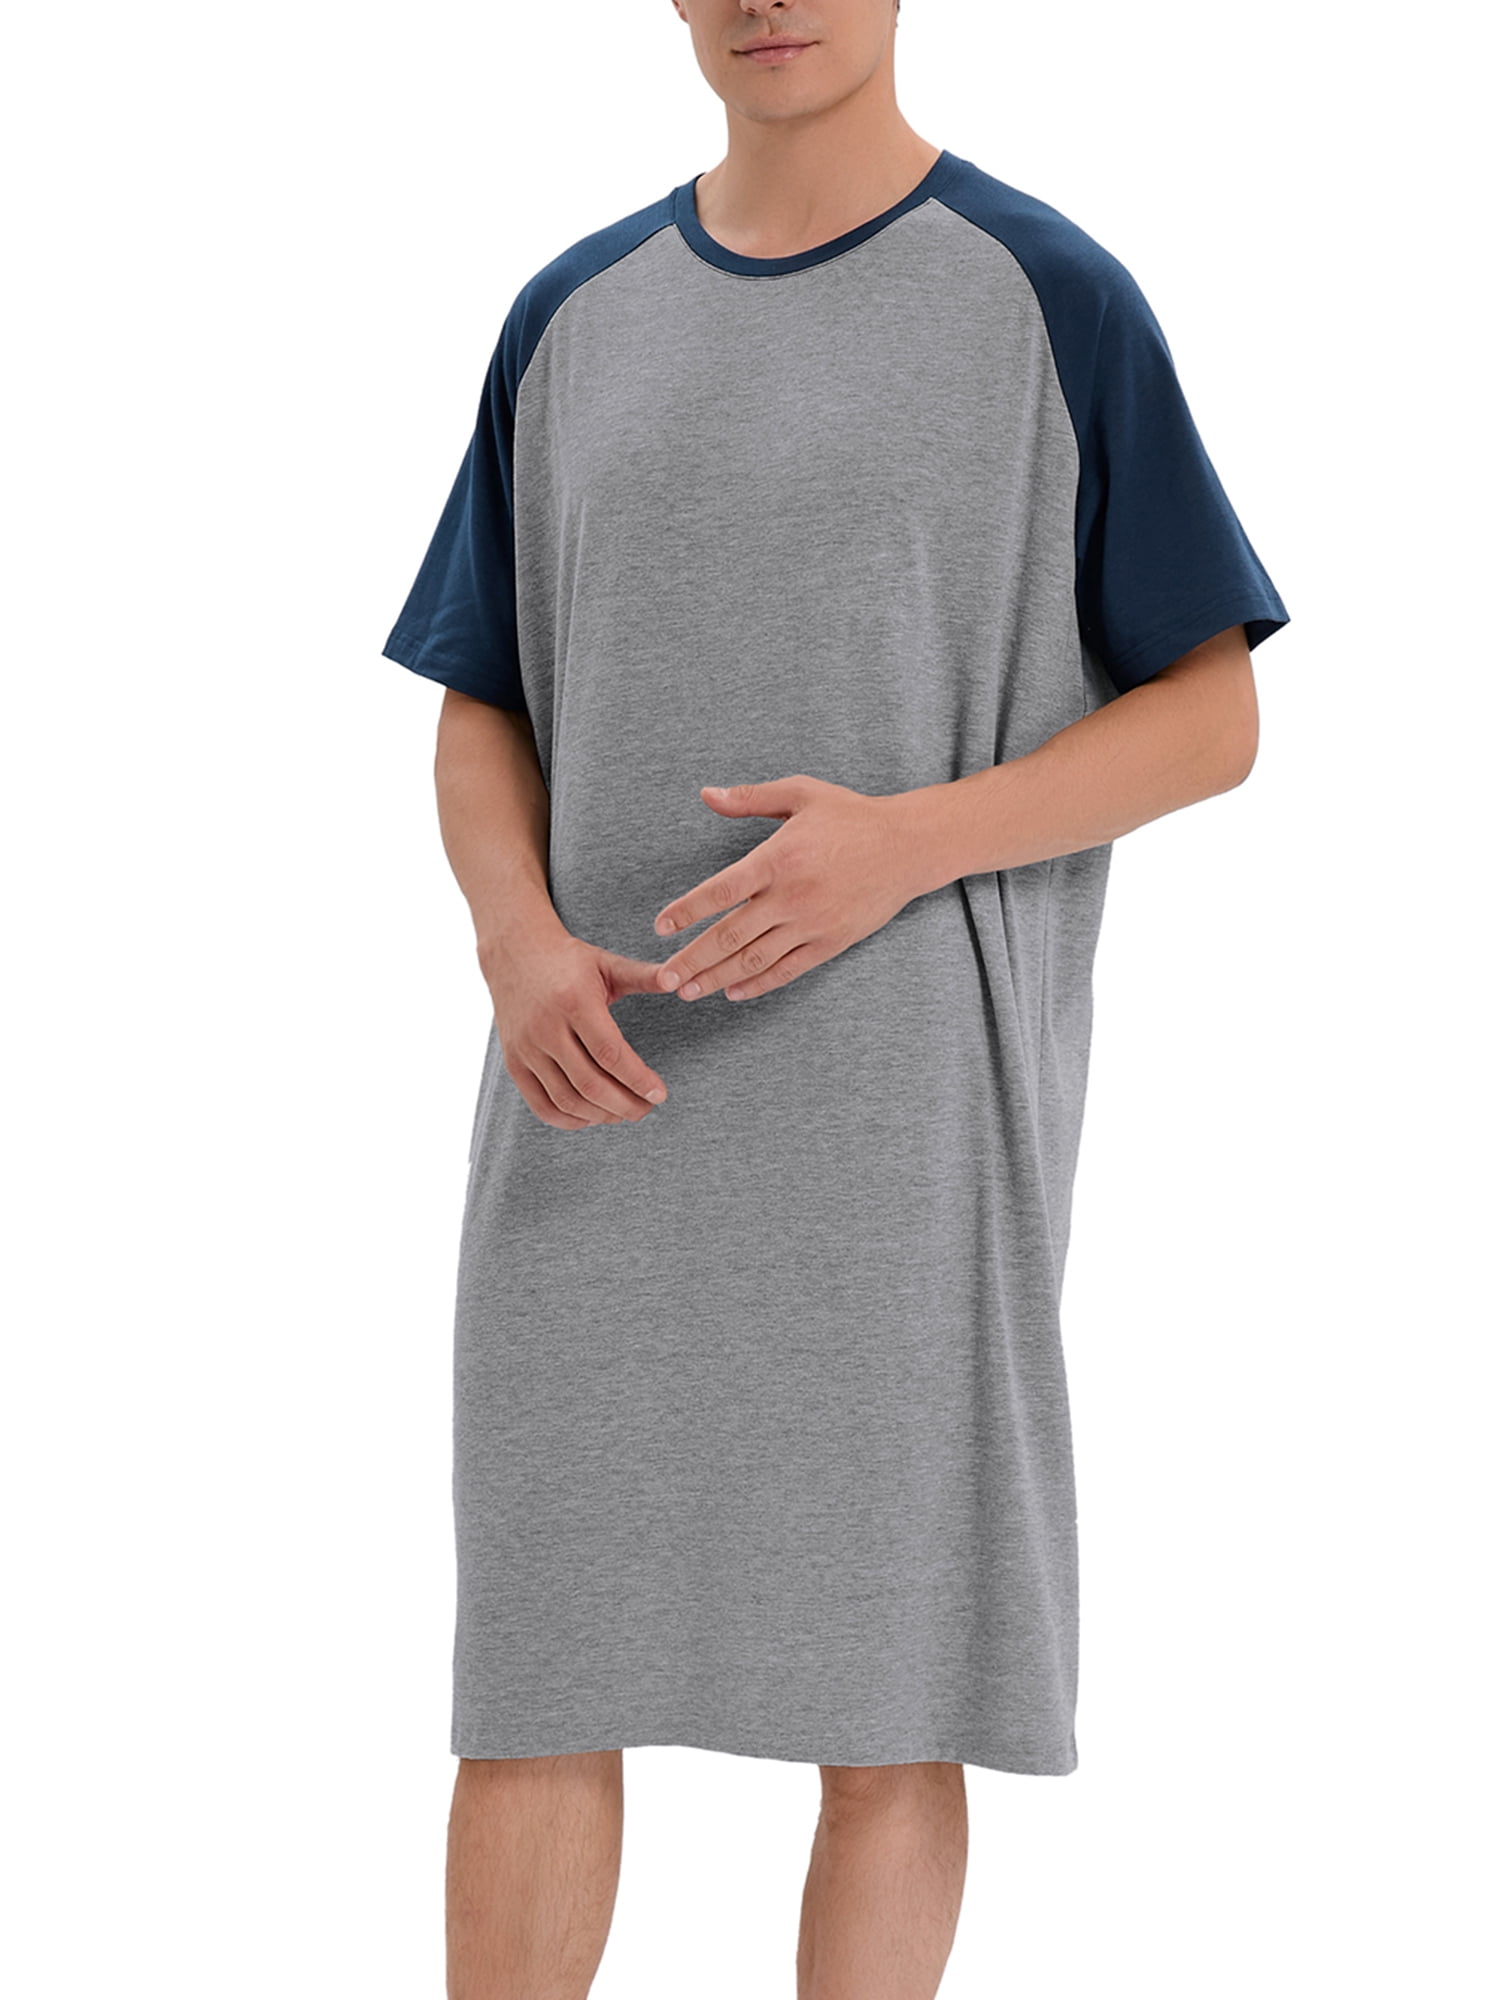 Youloveit Men's Pullove Pajamas T-shirt Nightgown, Short Sleeve Henley Crew  Neck Sleep Shirt Nightshirt Comfy Nightwear Big&Tall Soft Loose Pajama